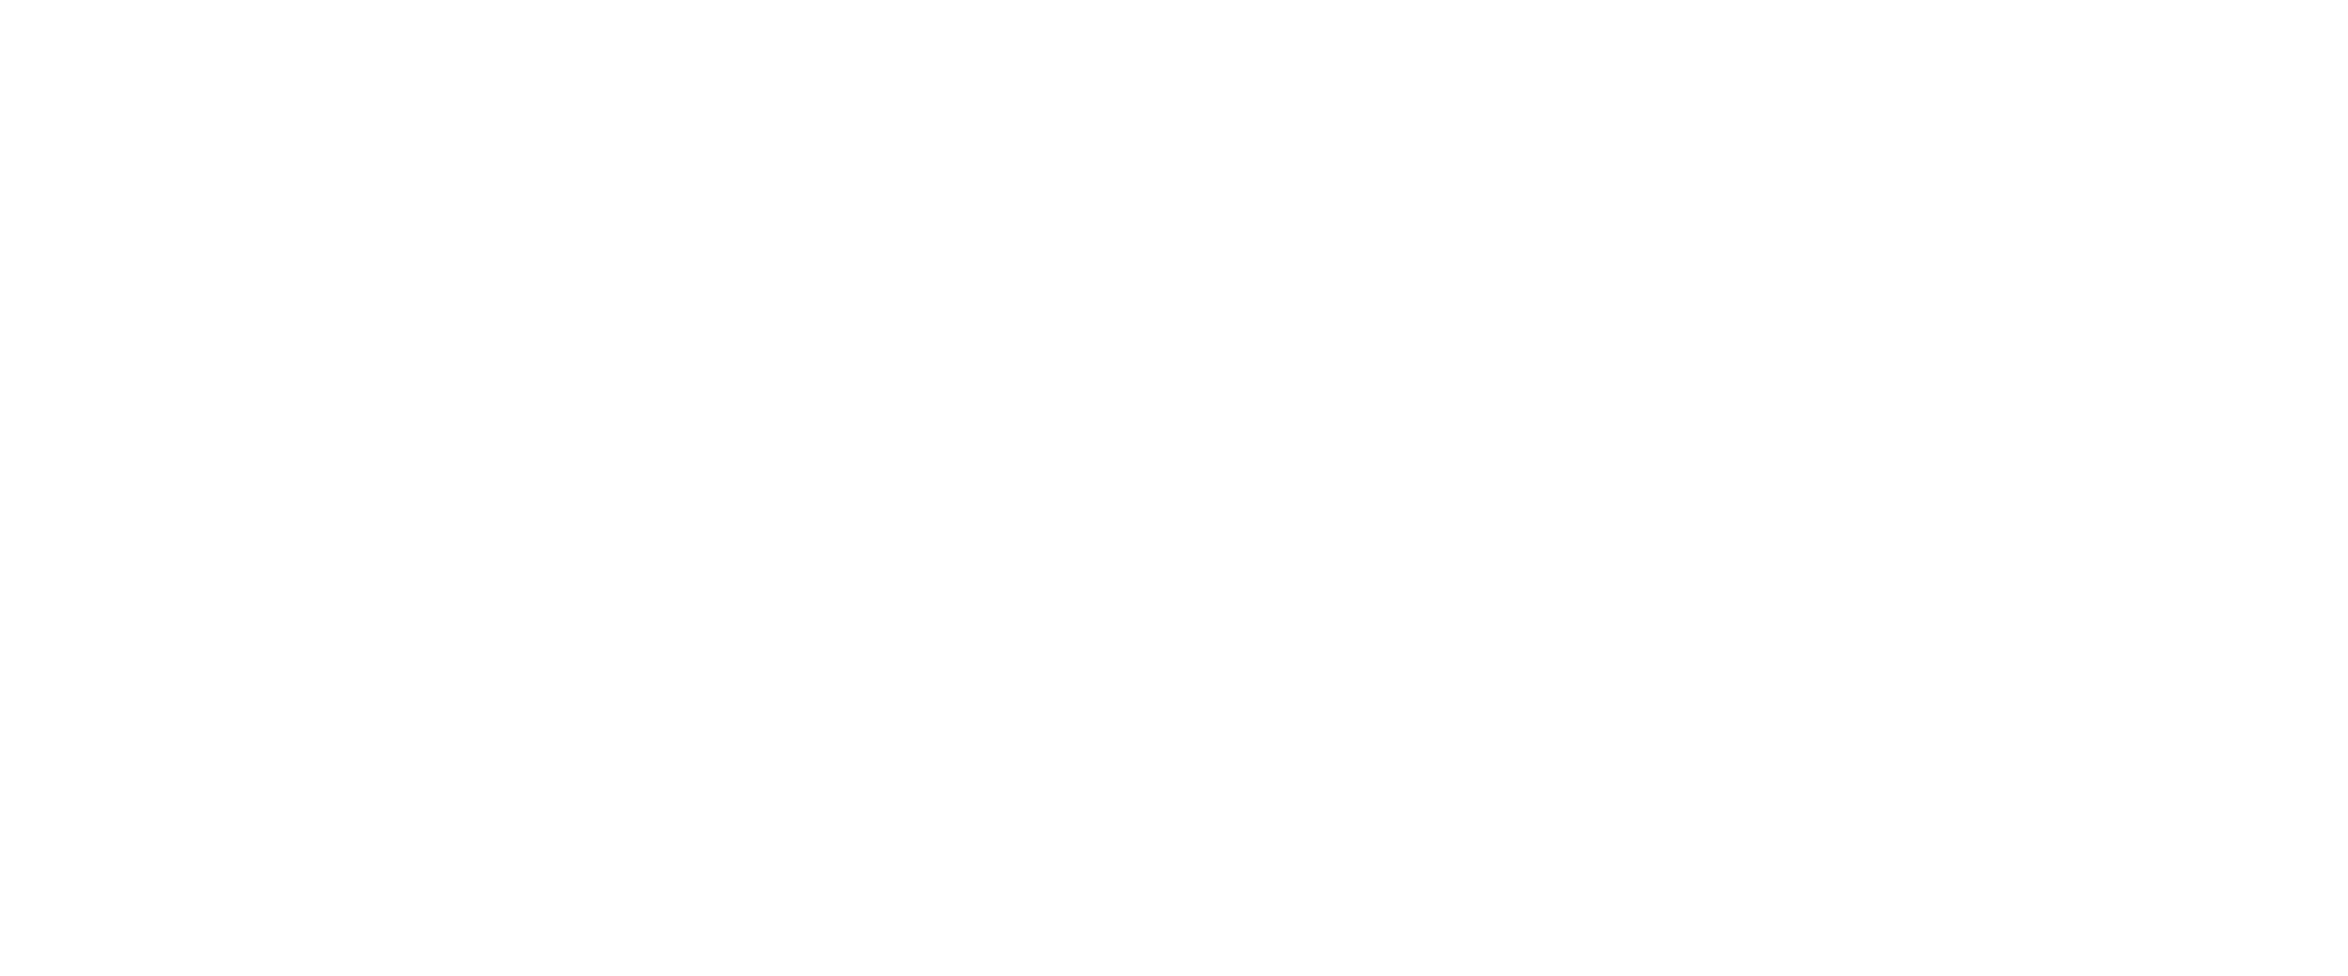 Quipt Home Medical logo large for dark backgrounds (transparent PNG)